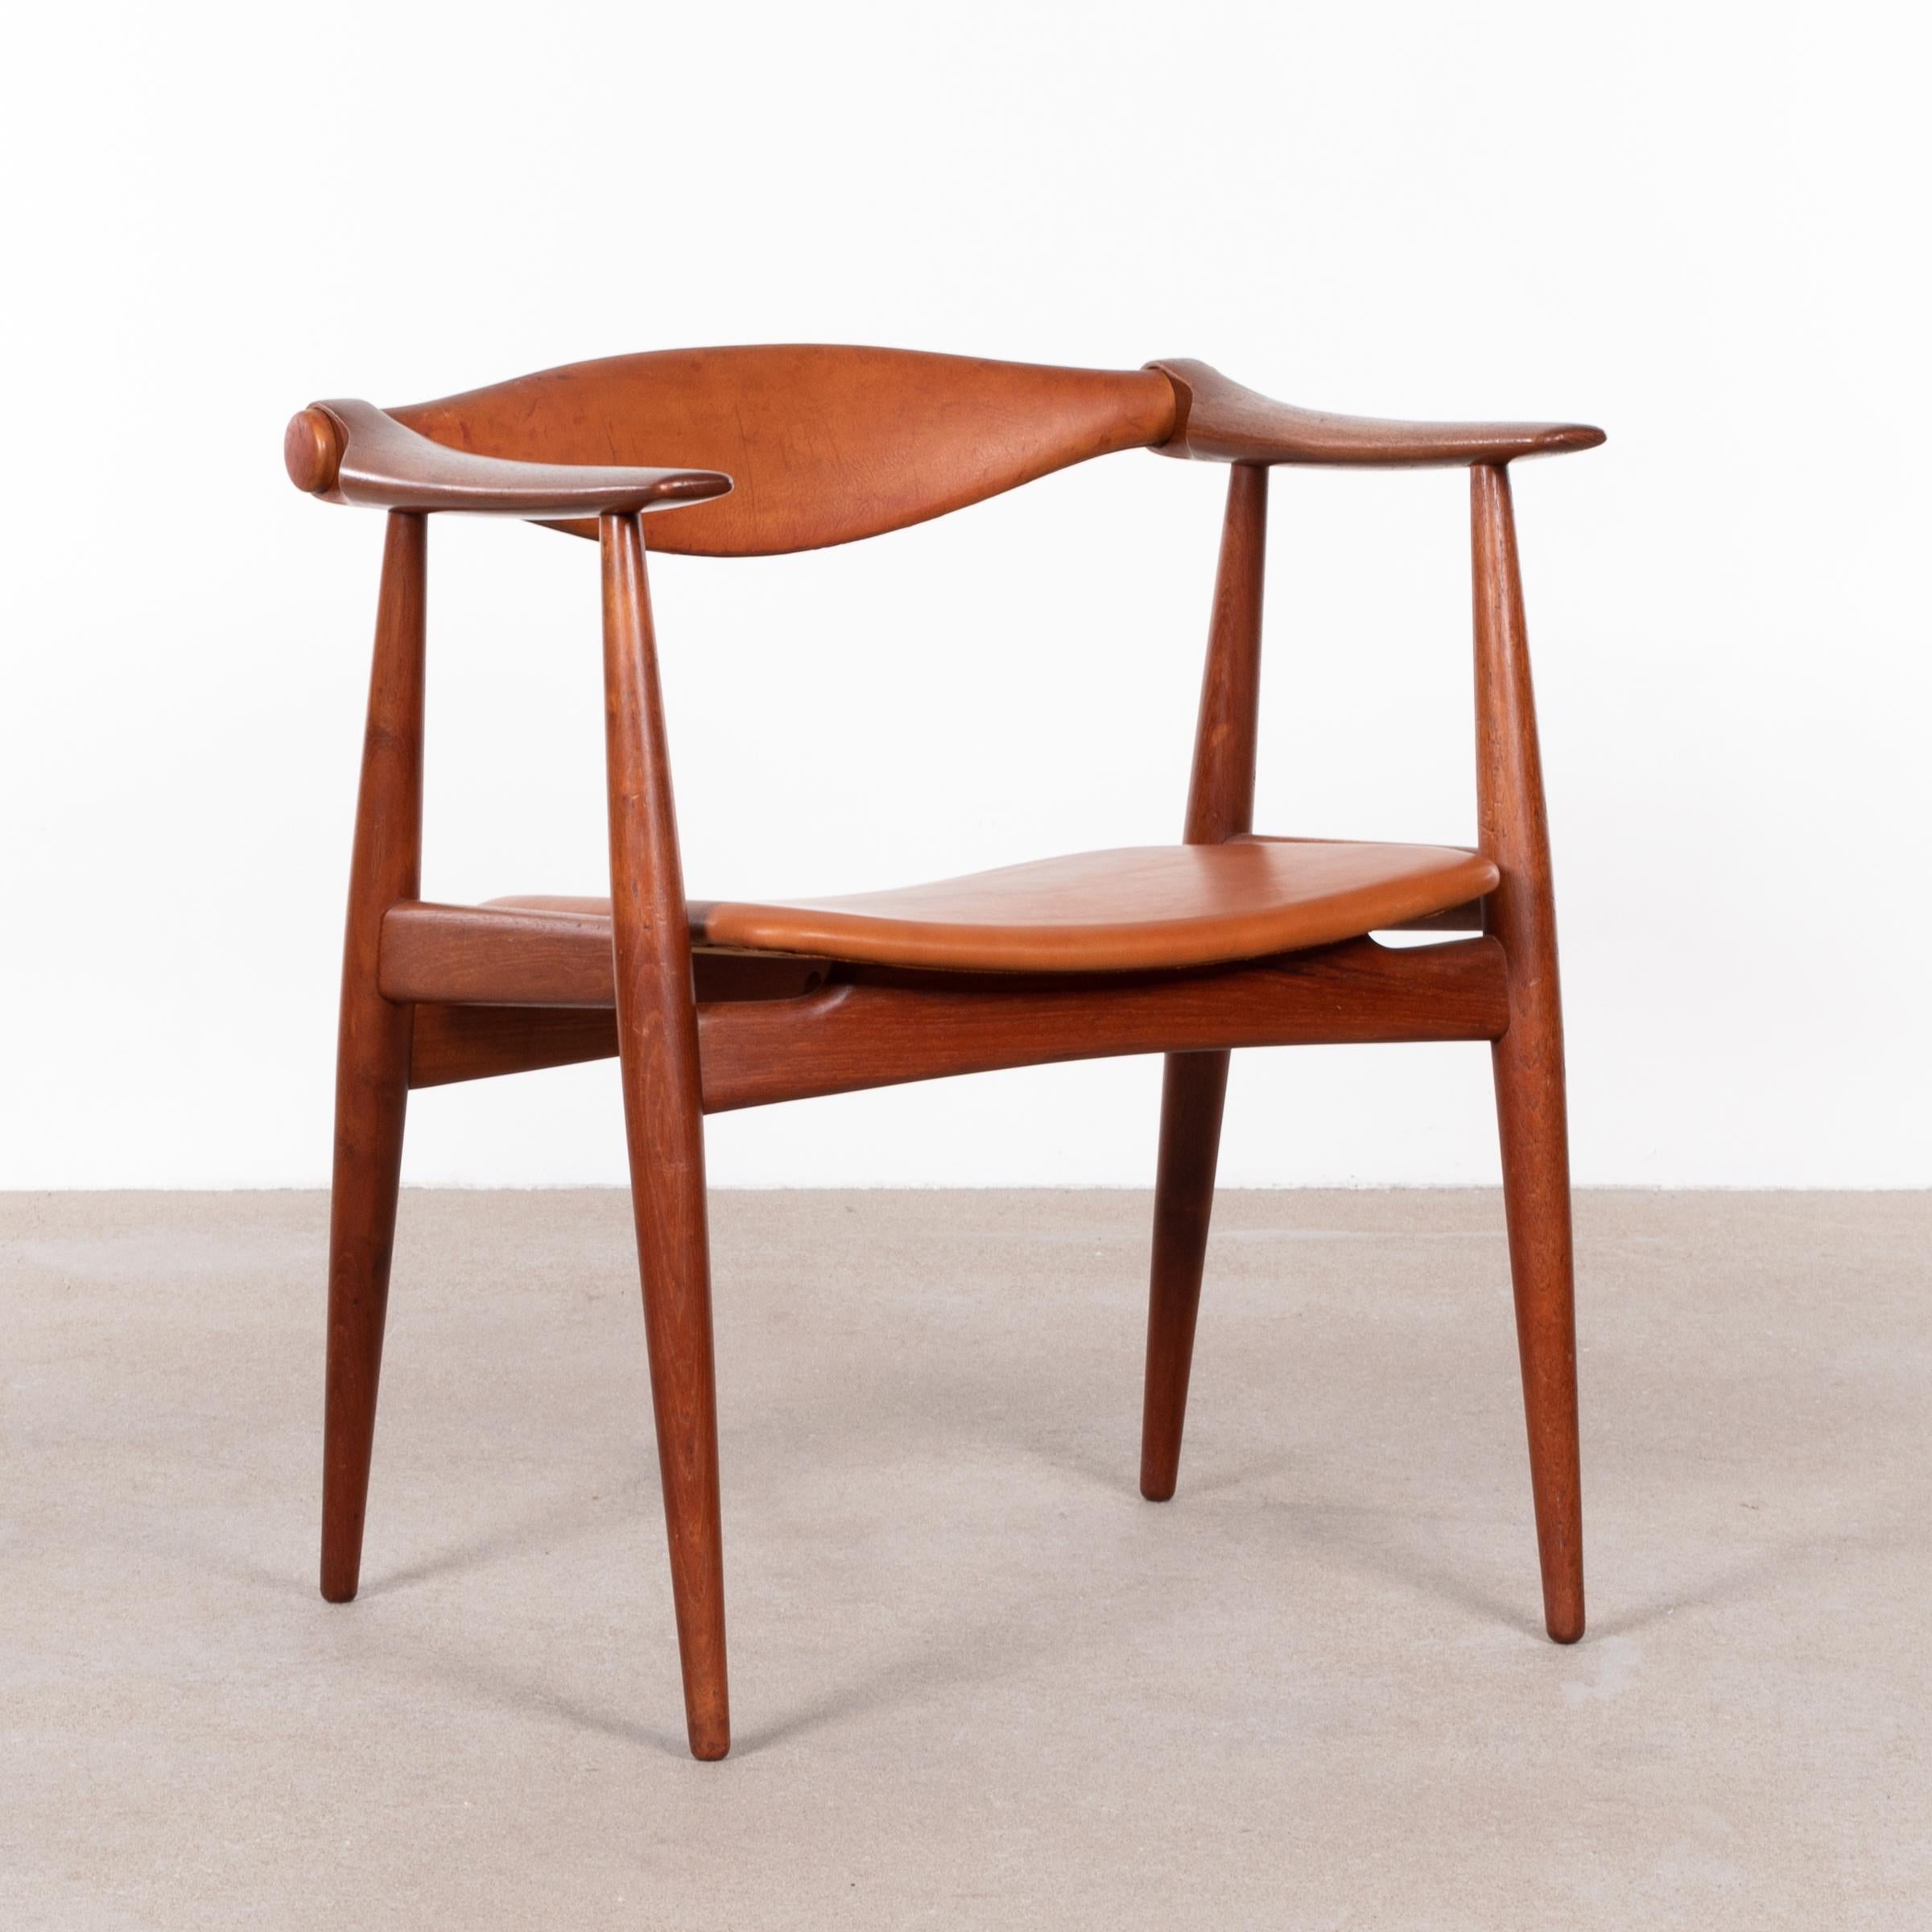 Hans Wegner CH34 Chair in Teak and Cognac Leather for Carl Hansen & Søn, Denmark 1